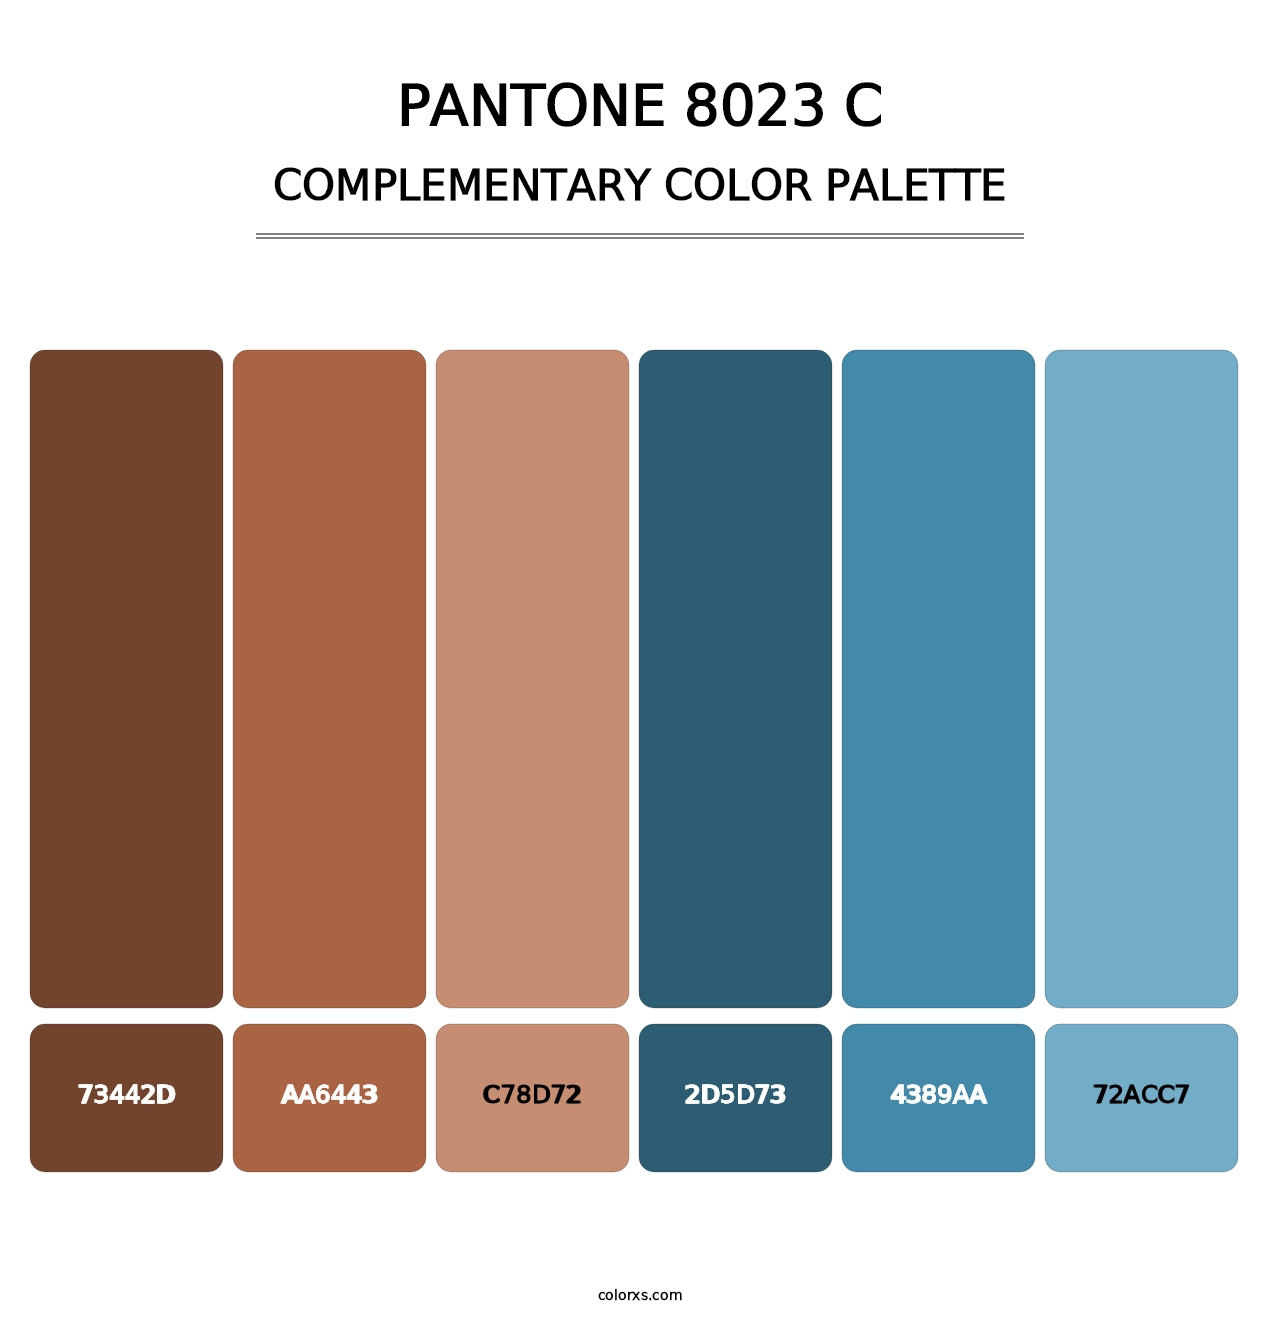 PANTONE 8023 C - Complementary Color Palette